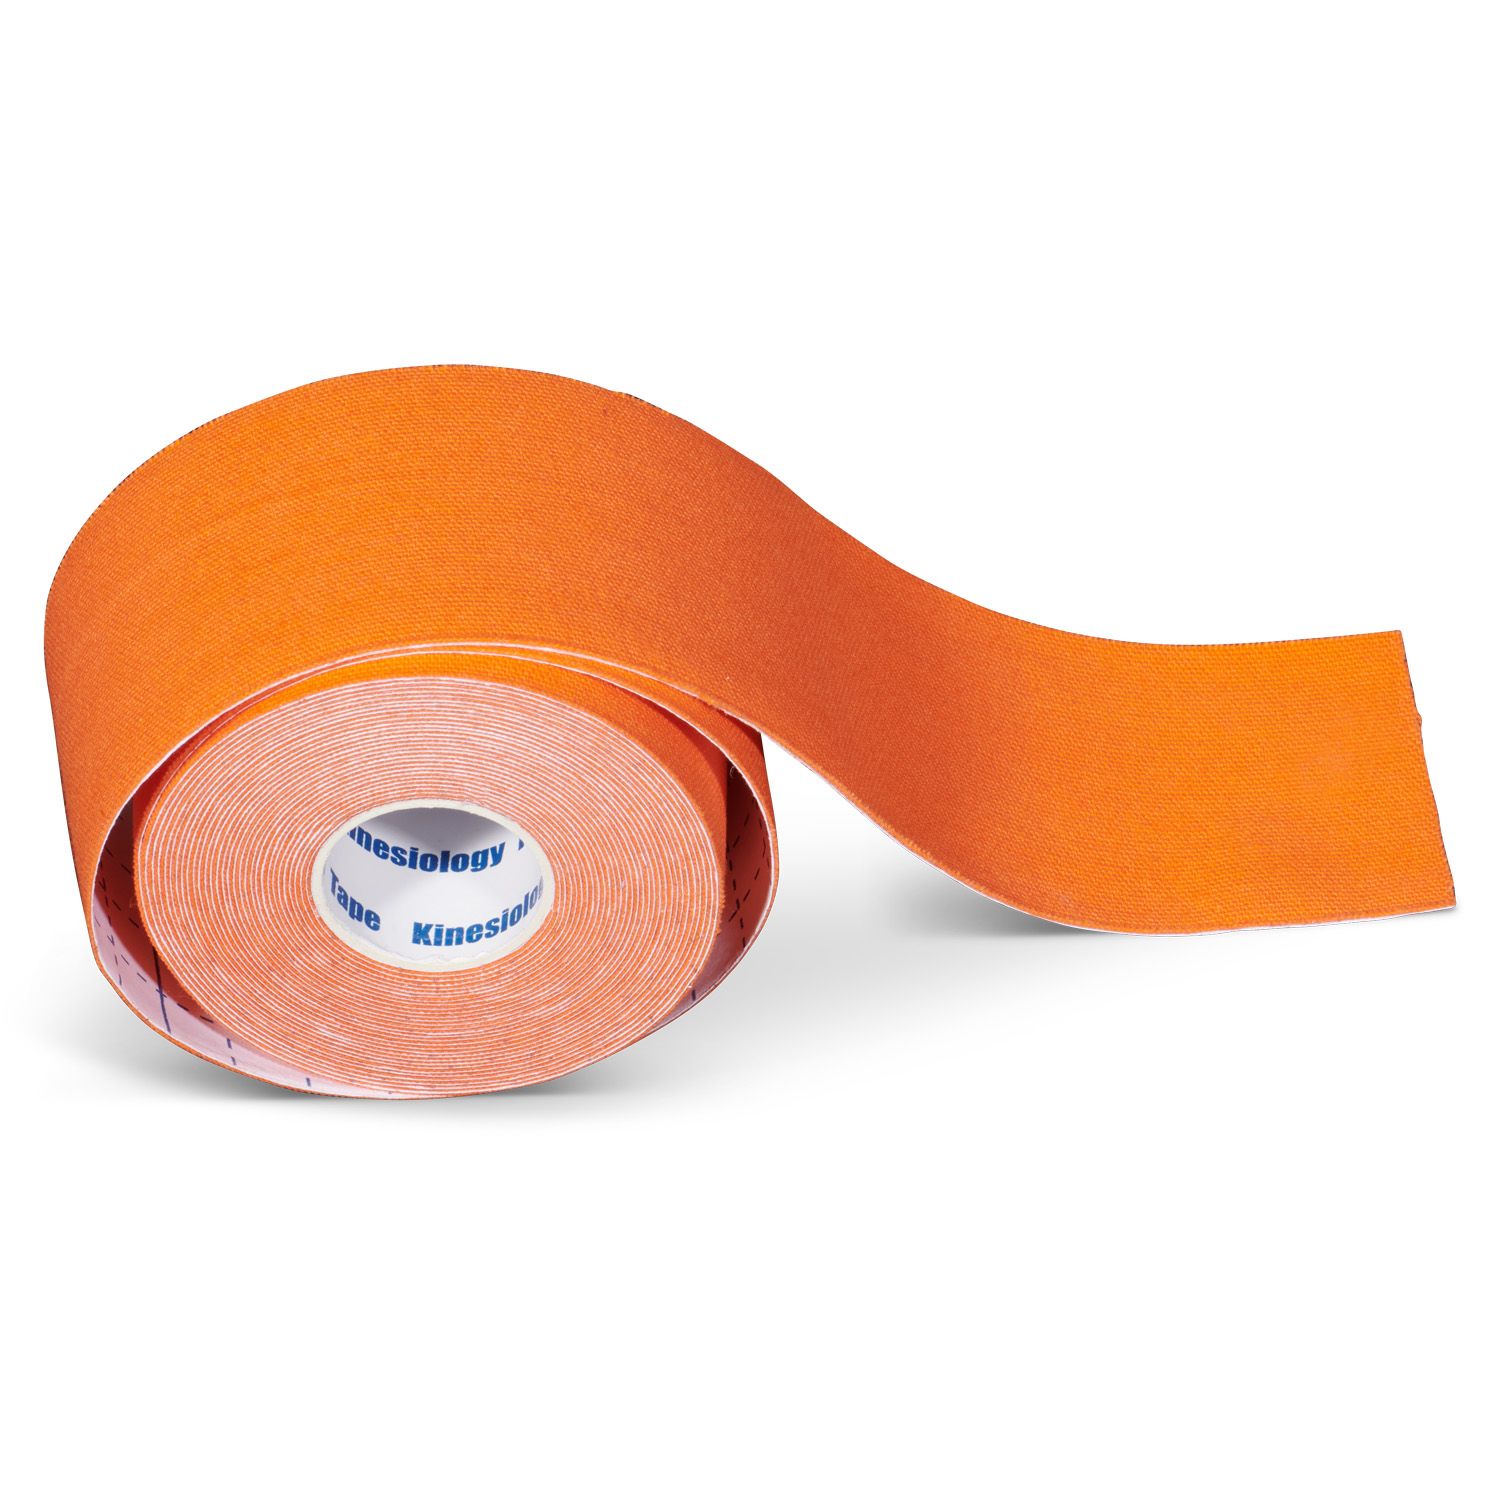 Kinesiology tape 12 rolls plus 3 rolls for free orange